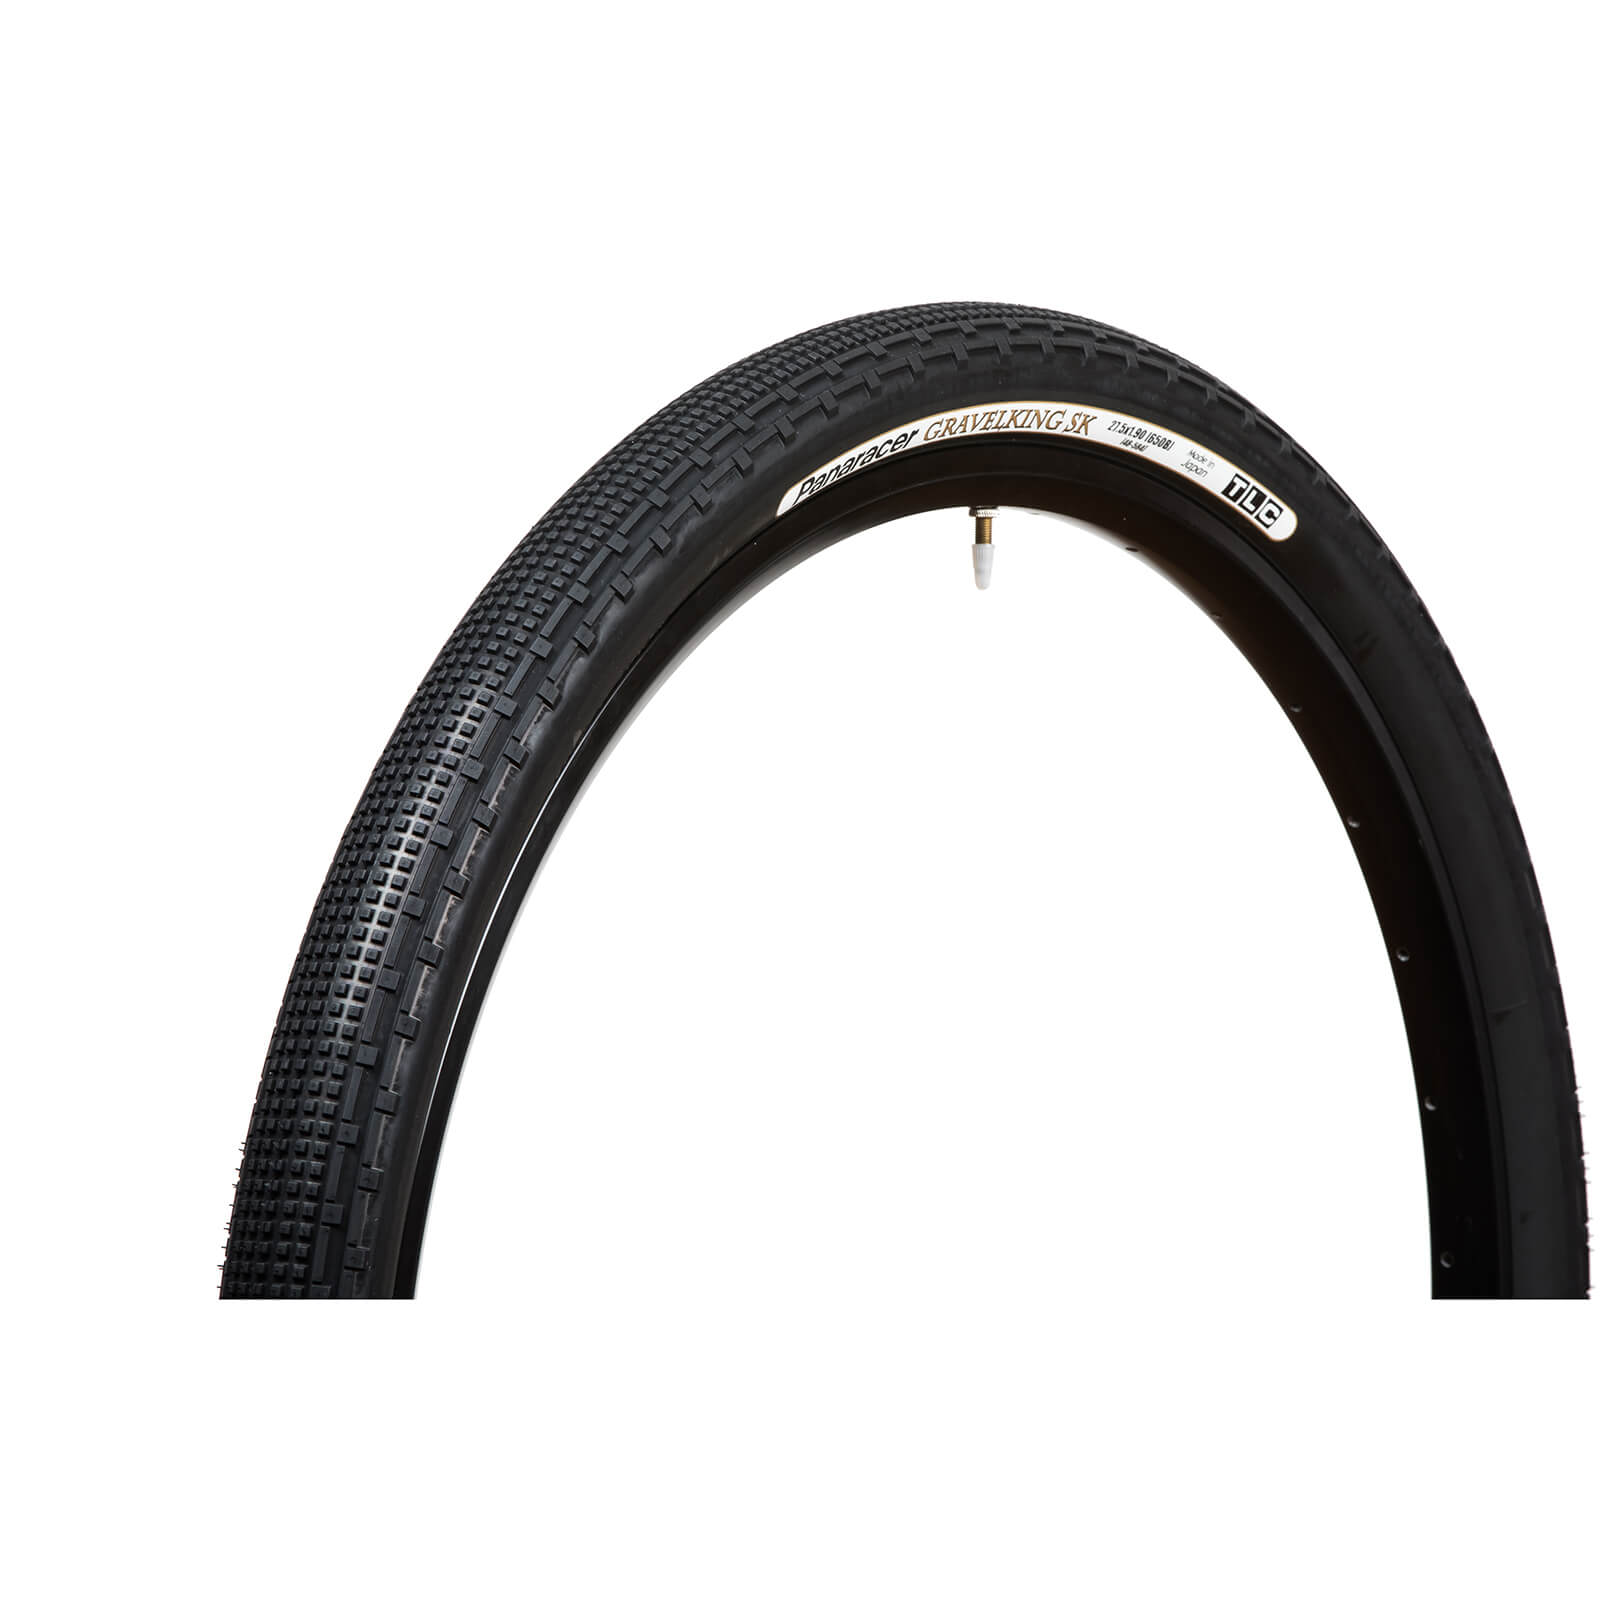 Panaracer Gravel King SK Tubeless Compatible Clincher Tire - 27.5in x 1.90in - Black